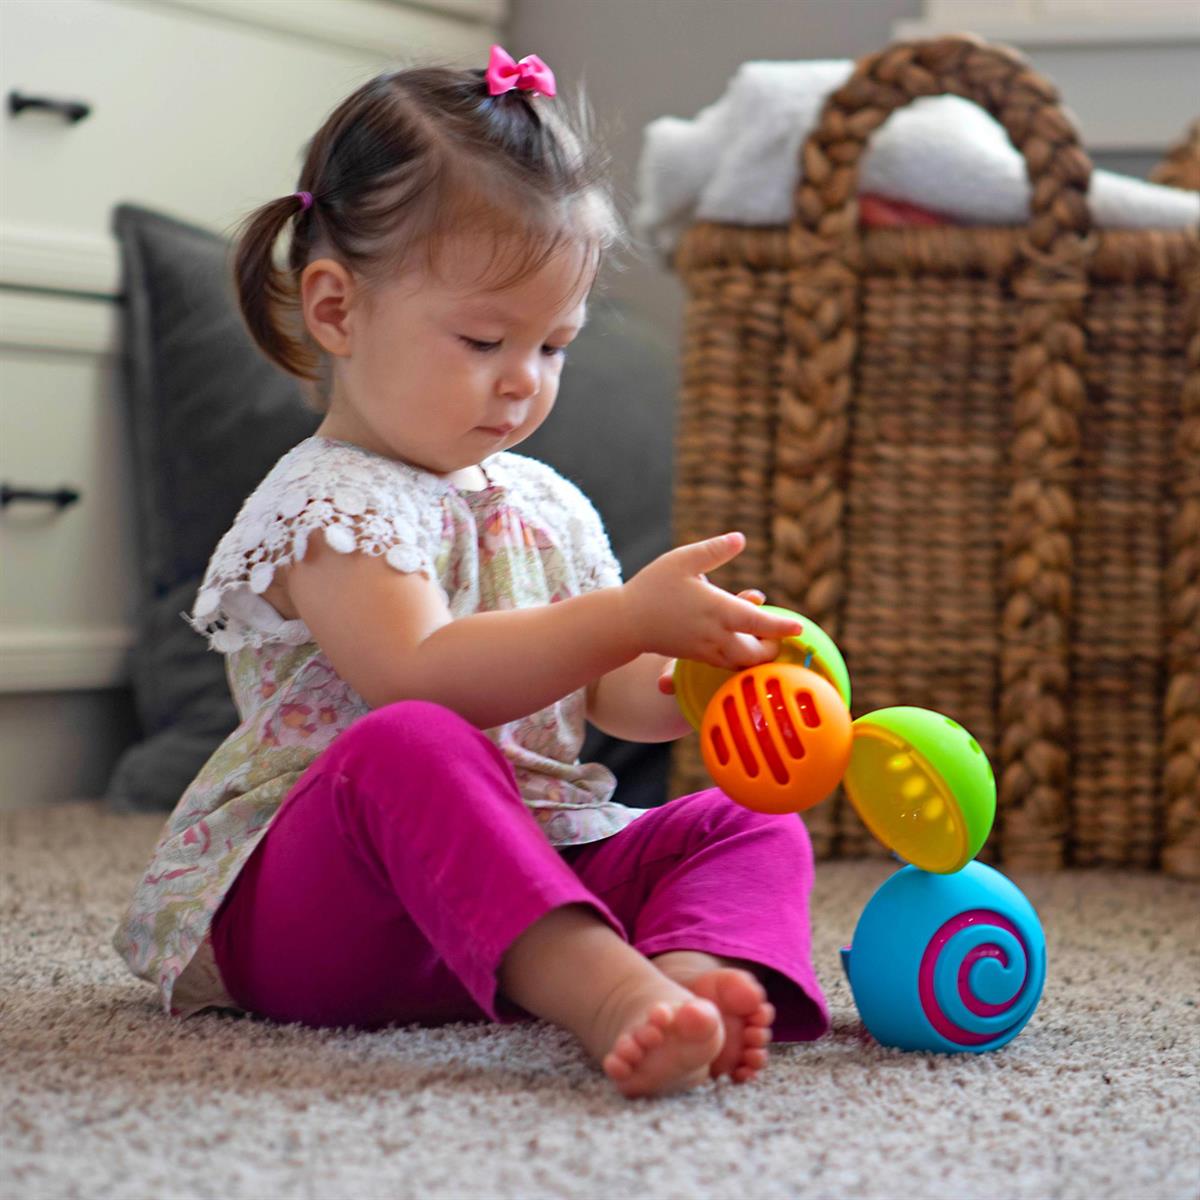 Іграшка-сортер сенсорна Омбі Fat Brain Toys Oombee Ball Сфери (F230ML)